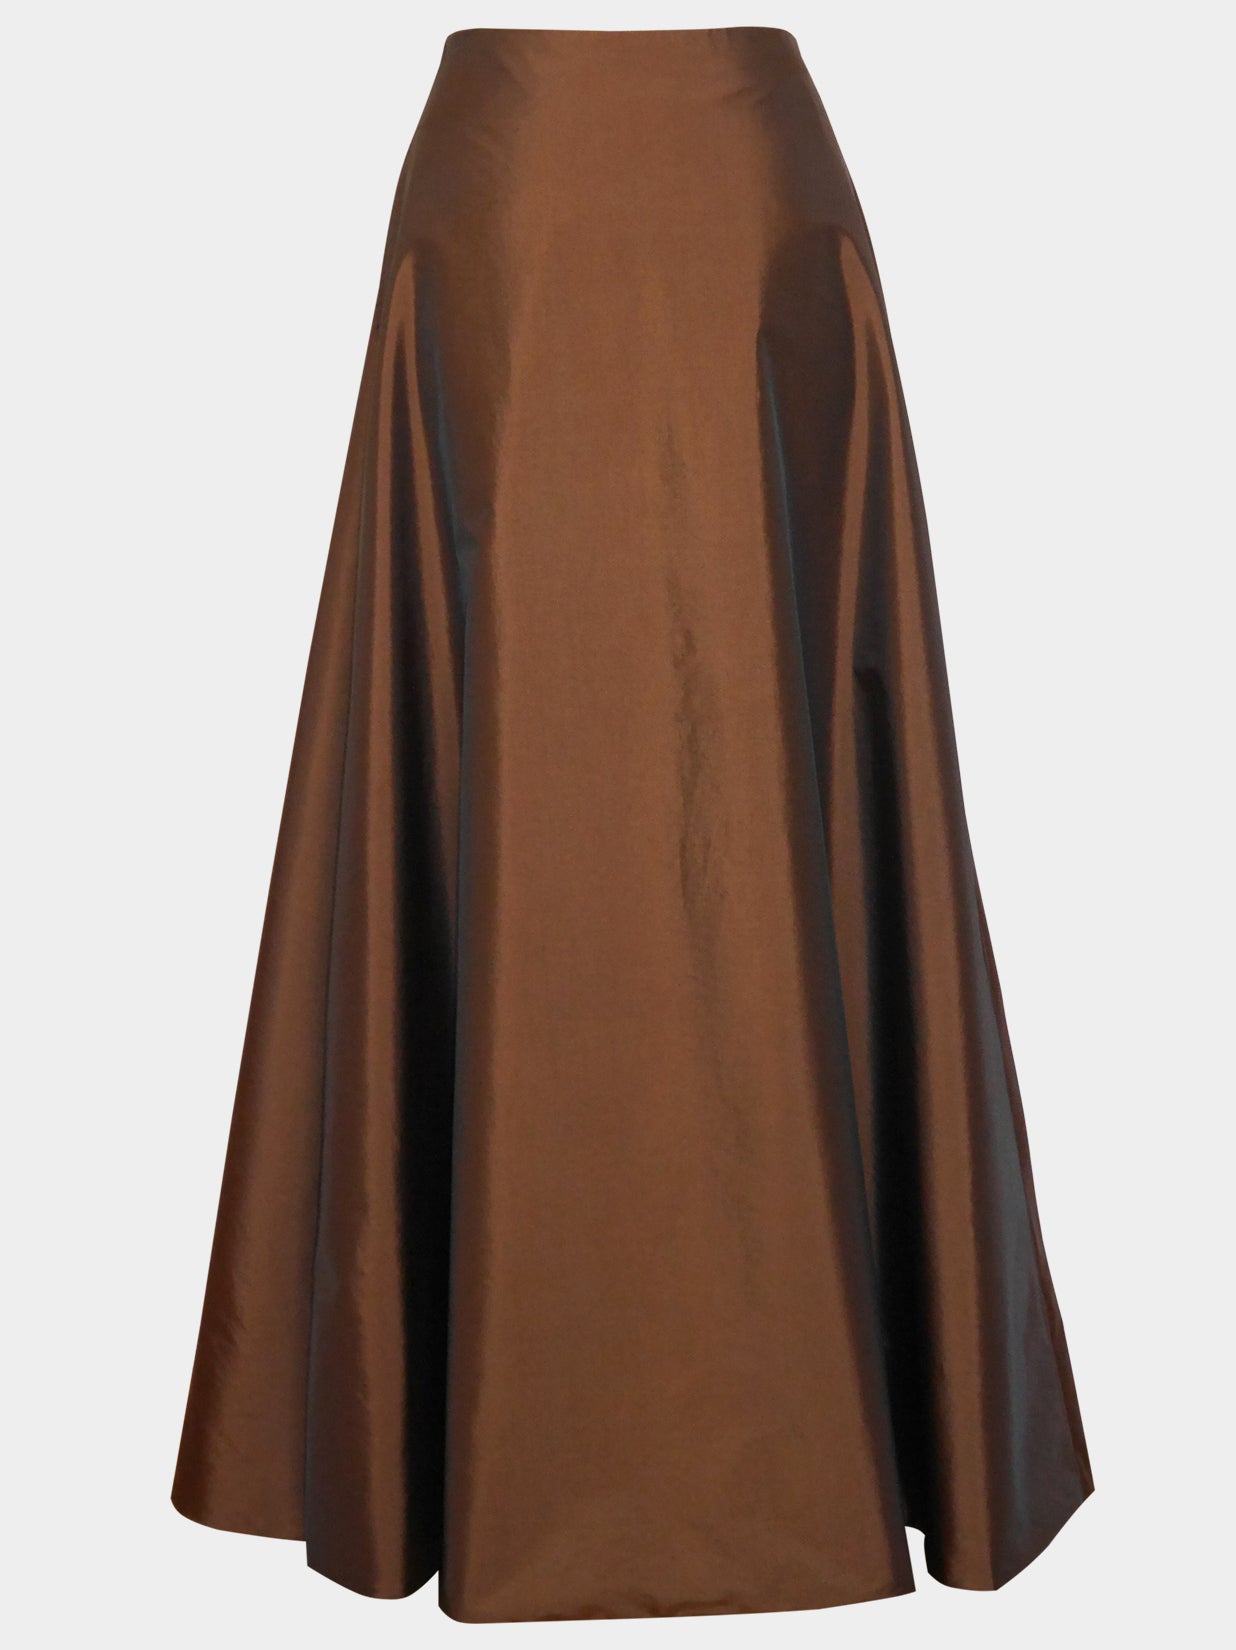 CLAUDE MONTANA 1990s Vintage Minimalist Copper Silk Maxi Evening Ball Gown Skirt Size S